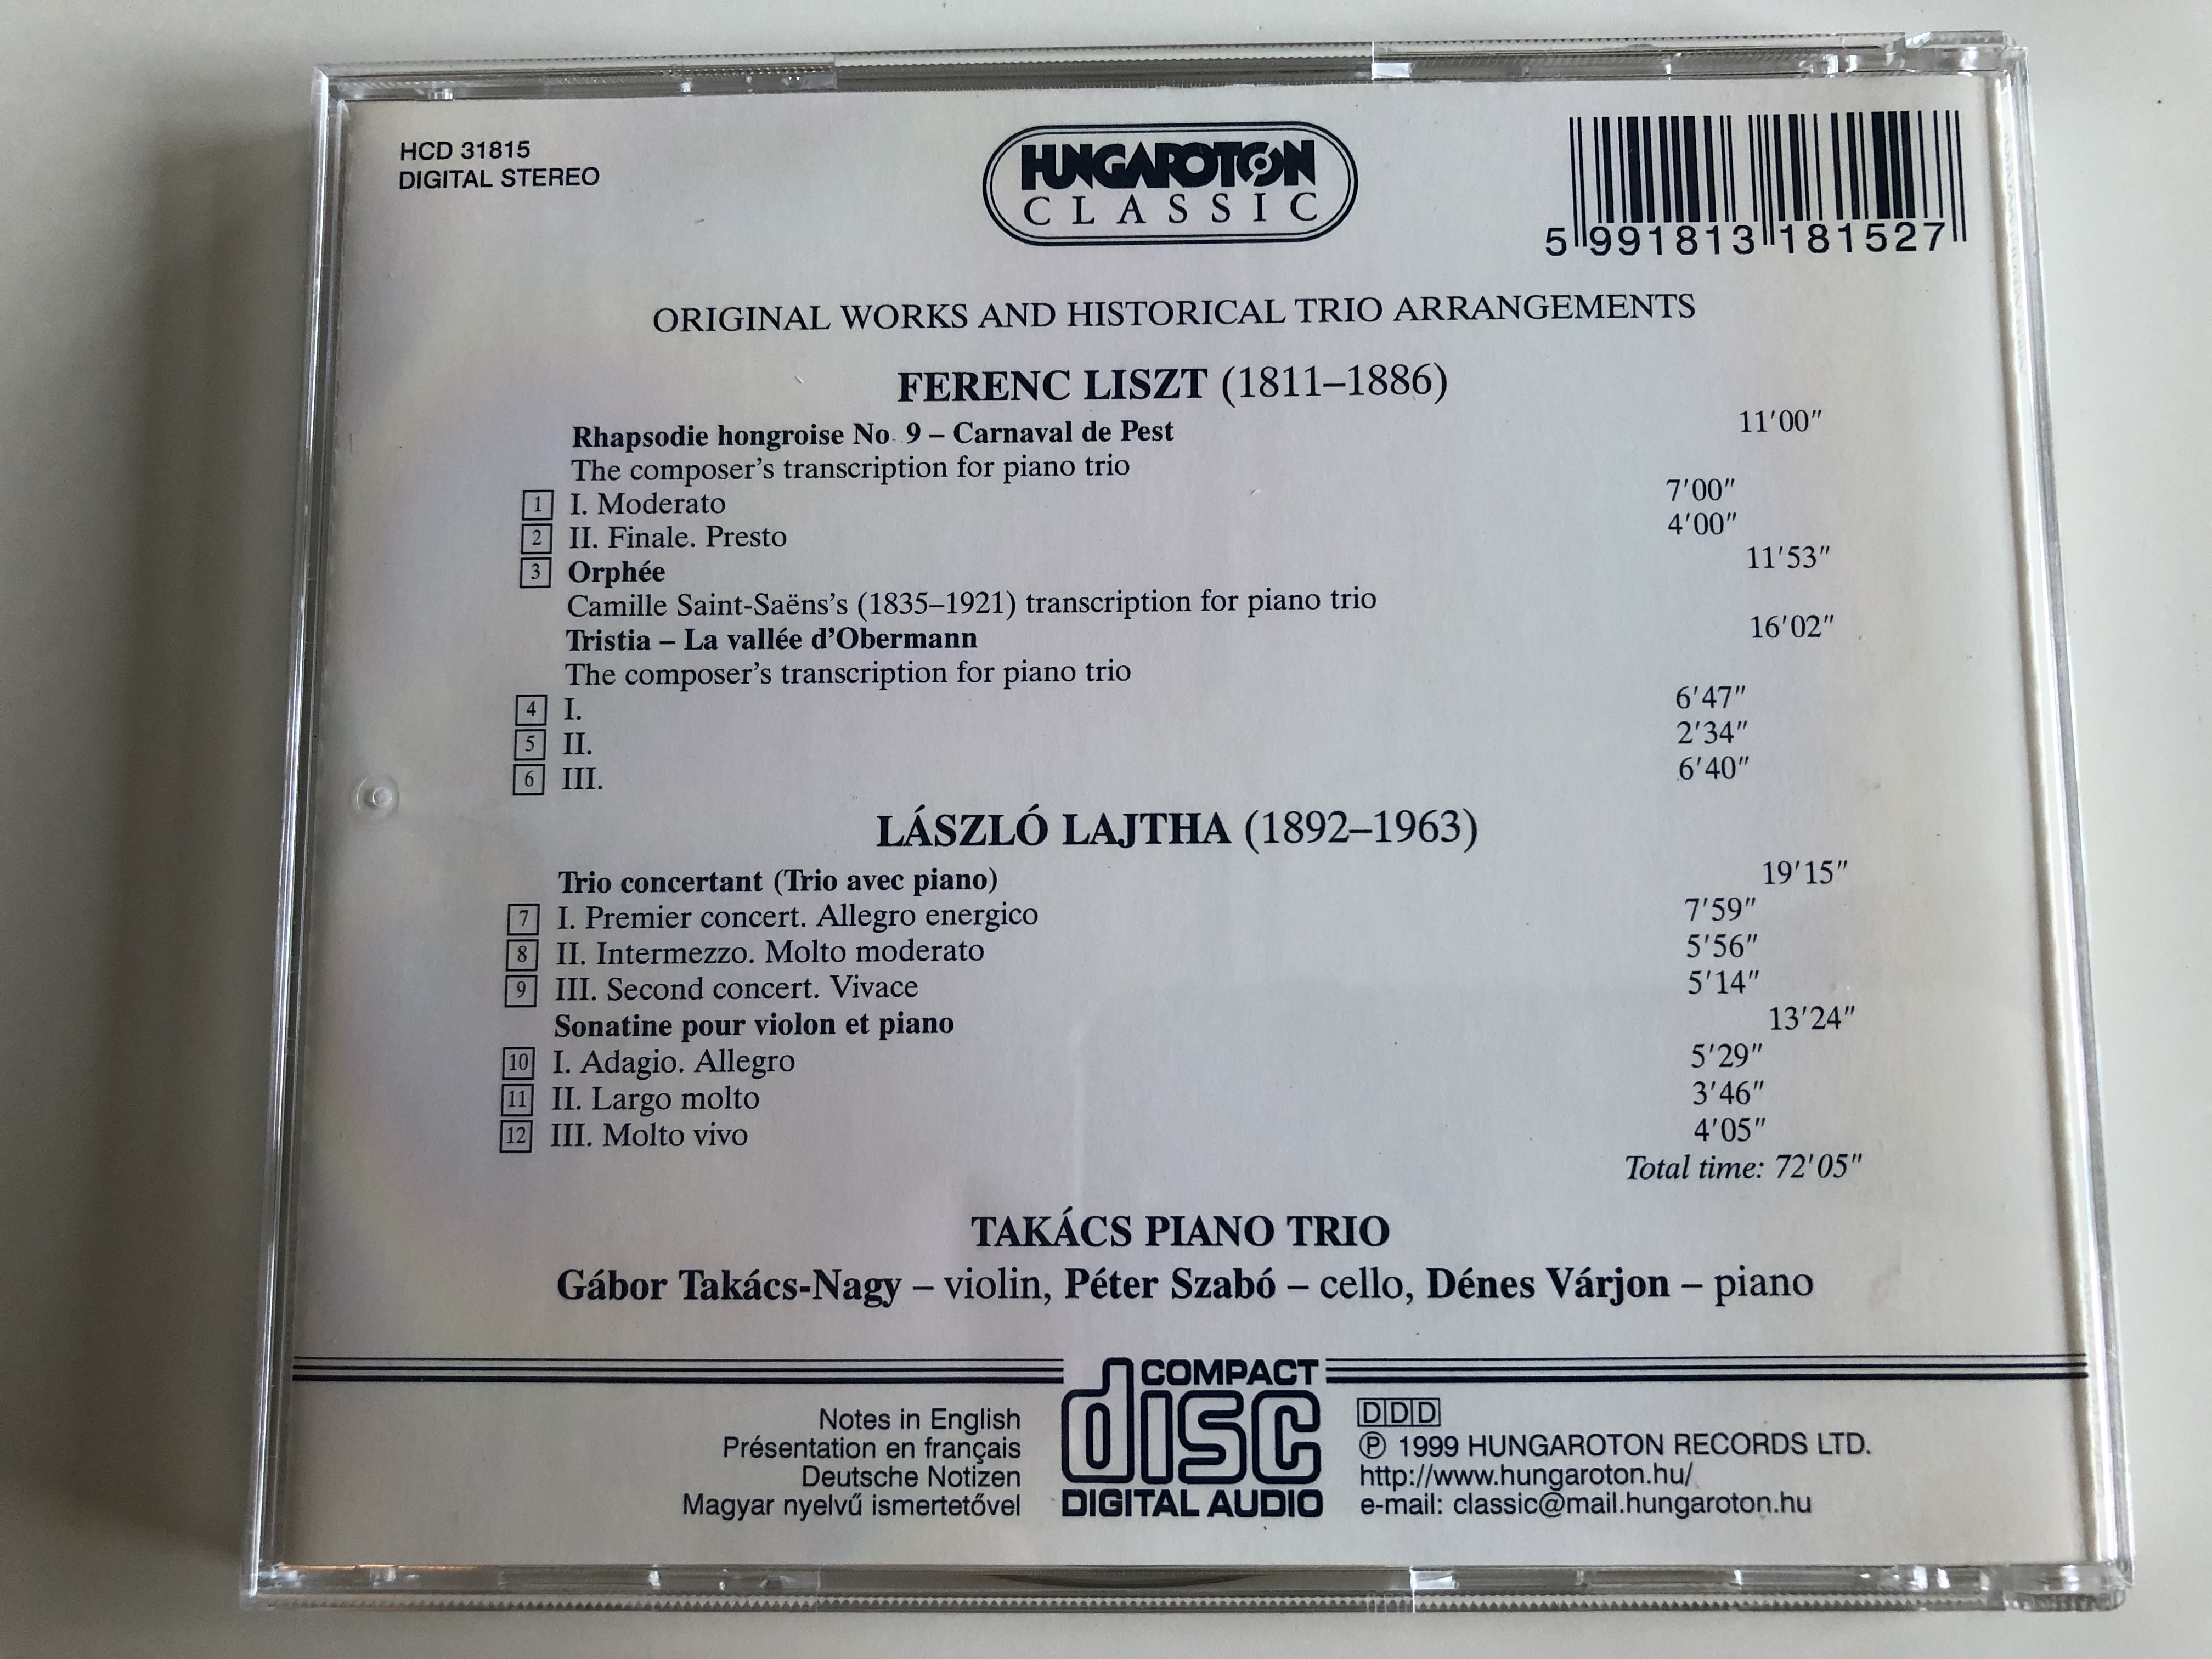 liszt-lajtha-piano-trios-lajtha-sonatine-op.-13-takacs-piano-trio-hungaroton-classic-audio-cd-1999-stereo-hcd-31815-7-.jpg